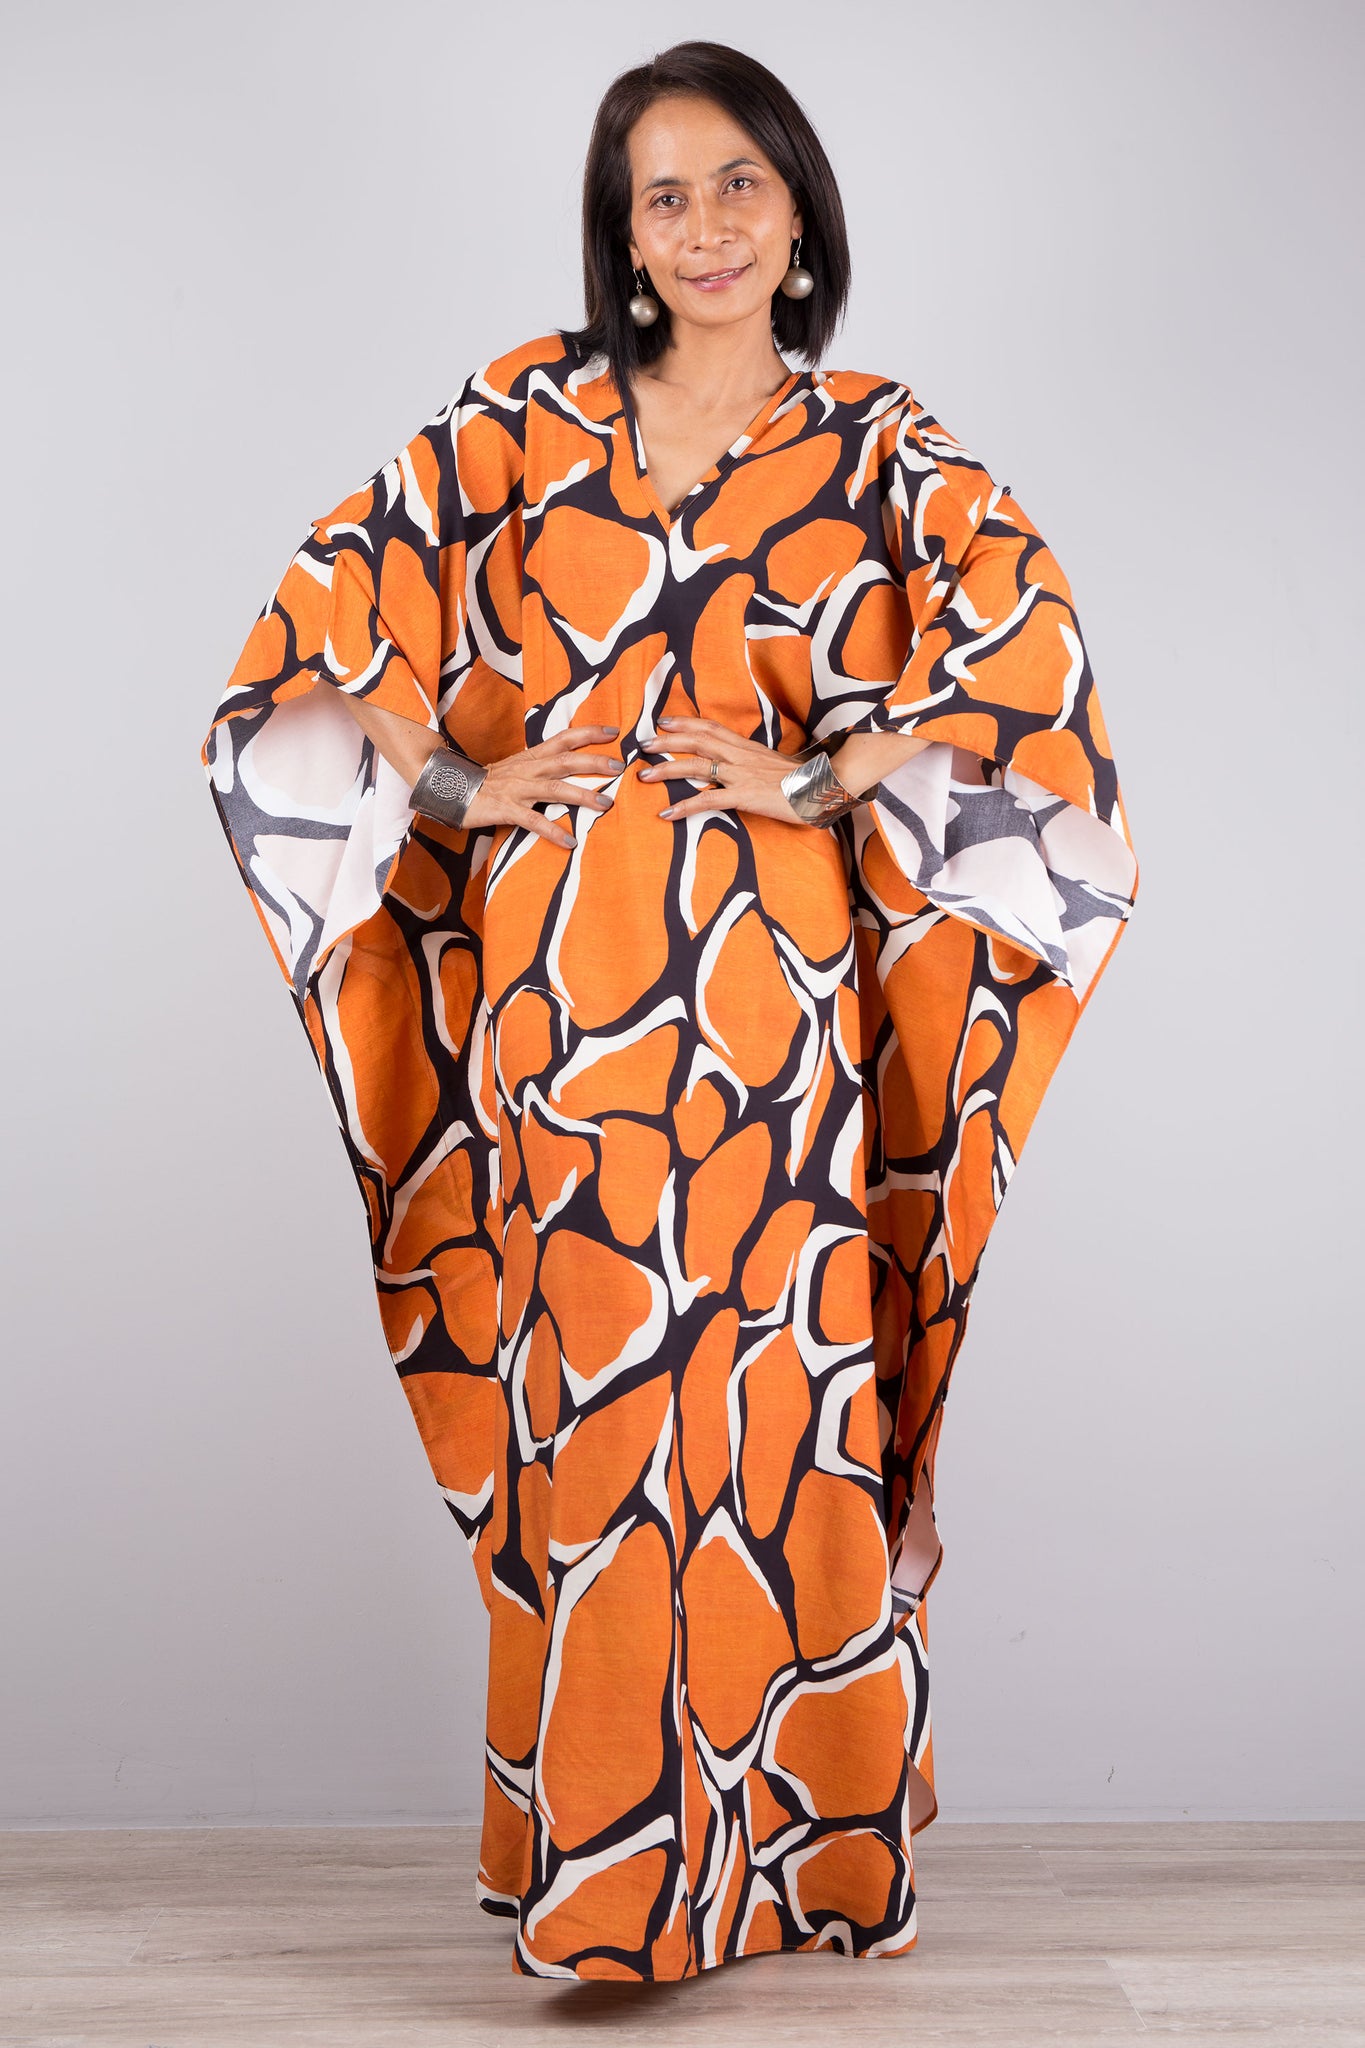 Orange kaftan dress